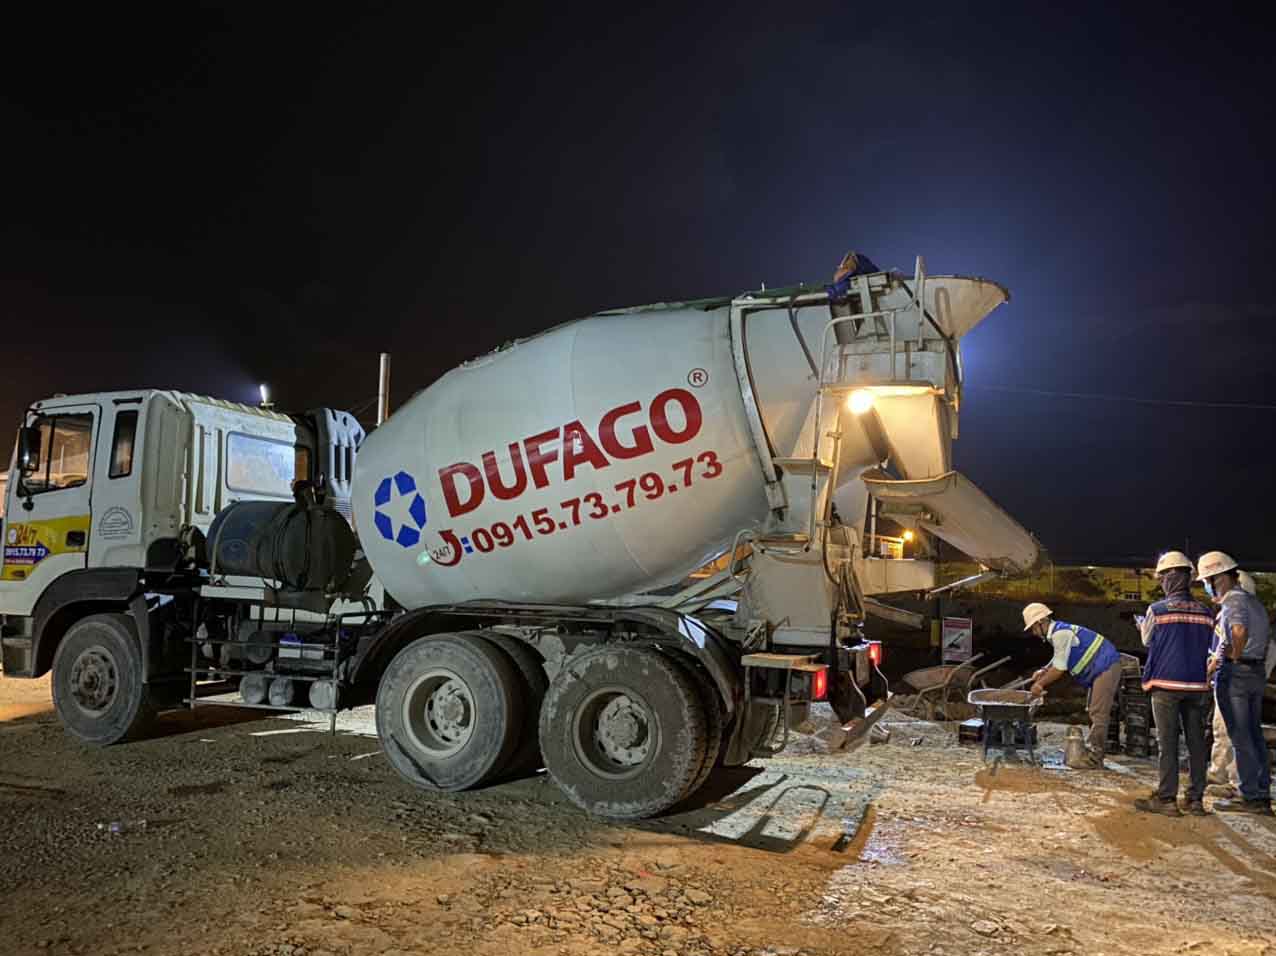 Dufago commercial concrete in Da Nang